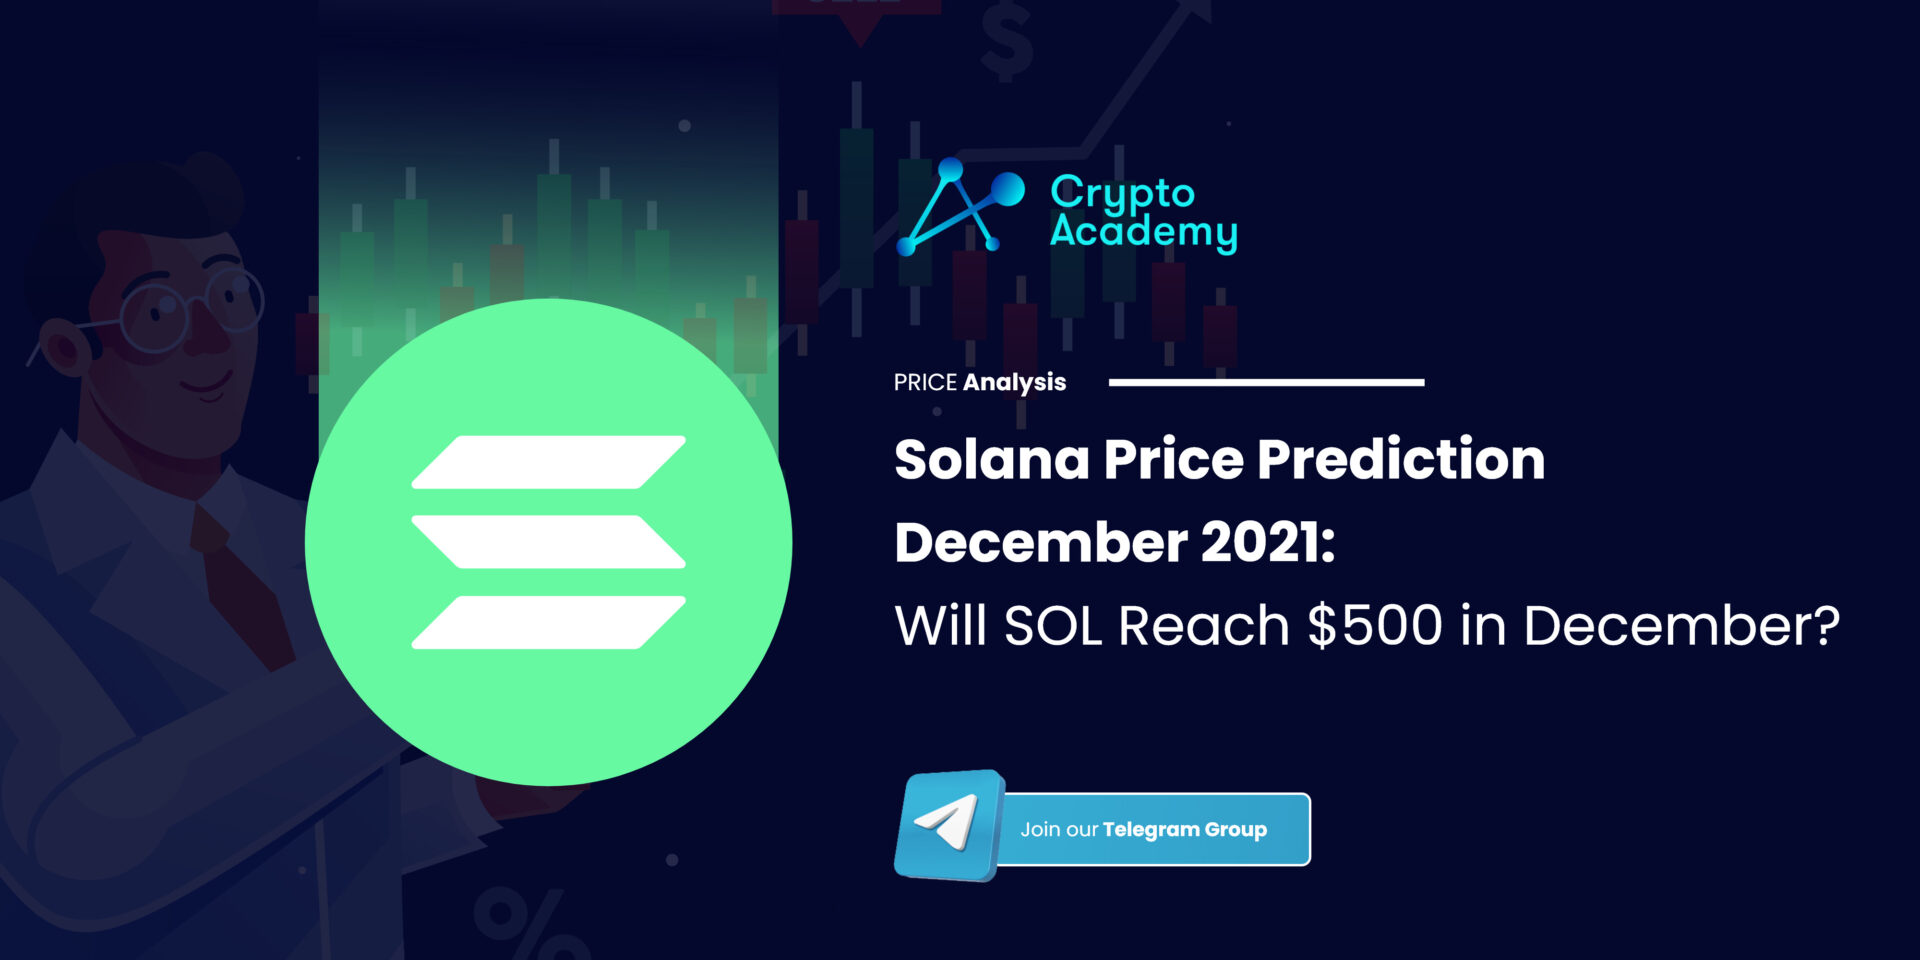 Solana Price Prediction December 2021: Will SOL Reach $500 in December?